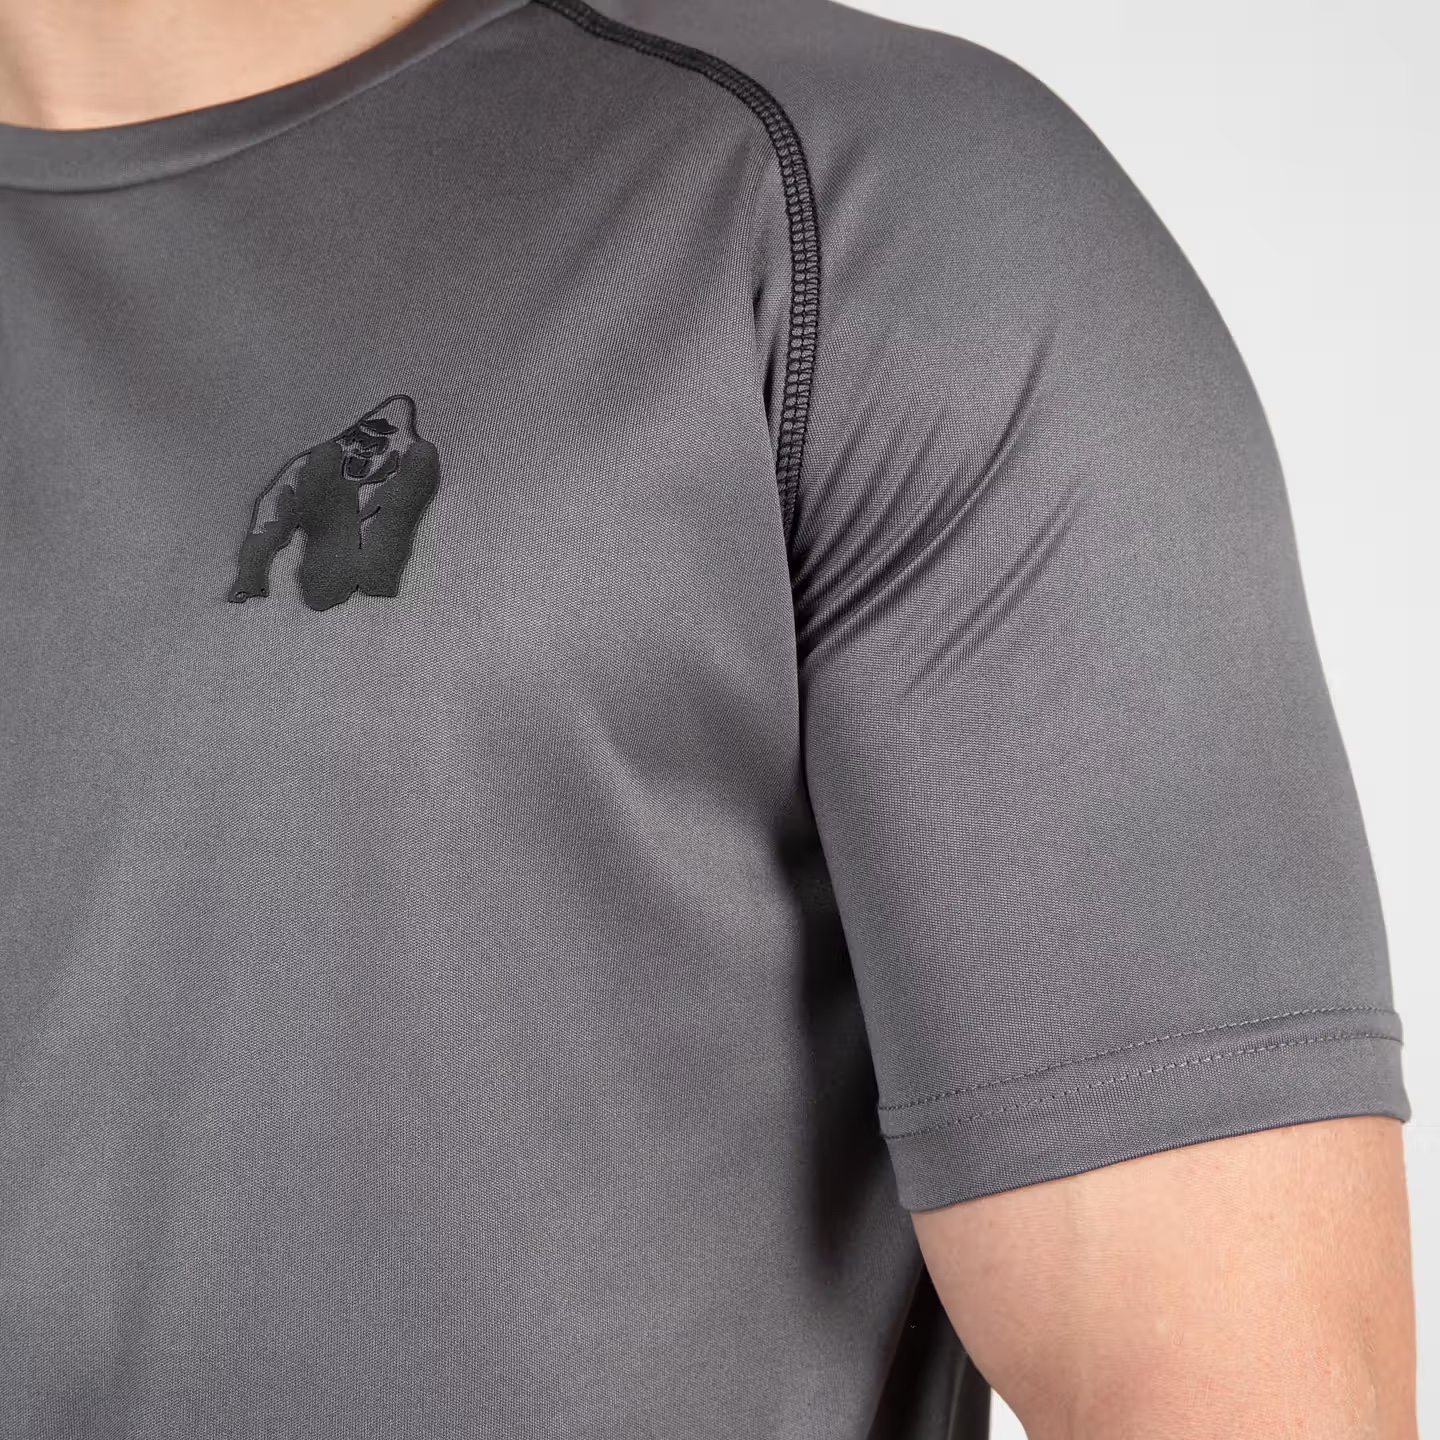 Gorilla Wear - Performance T-shirt, grey